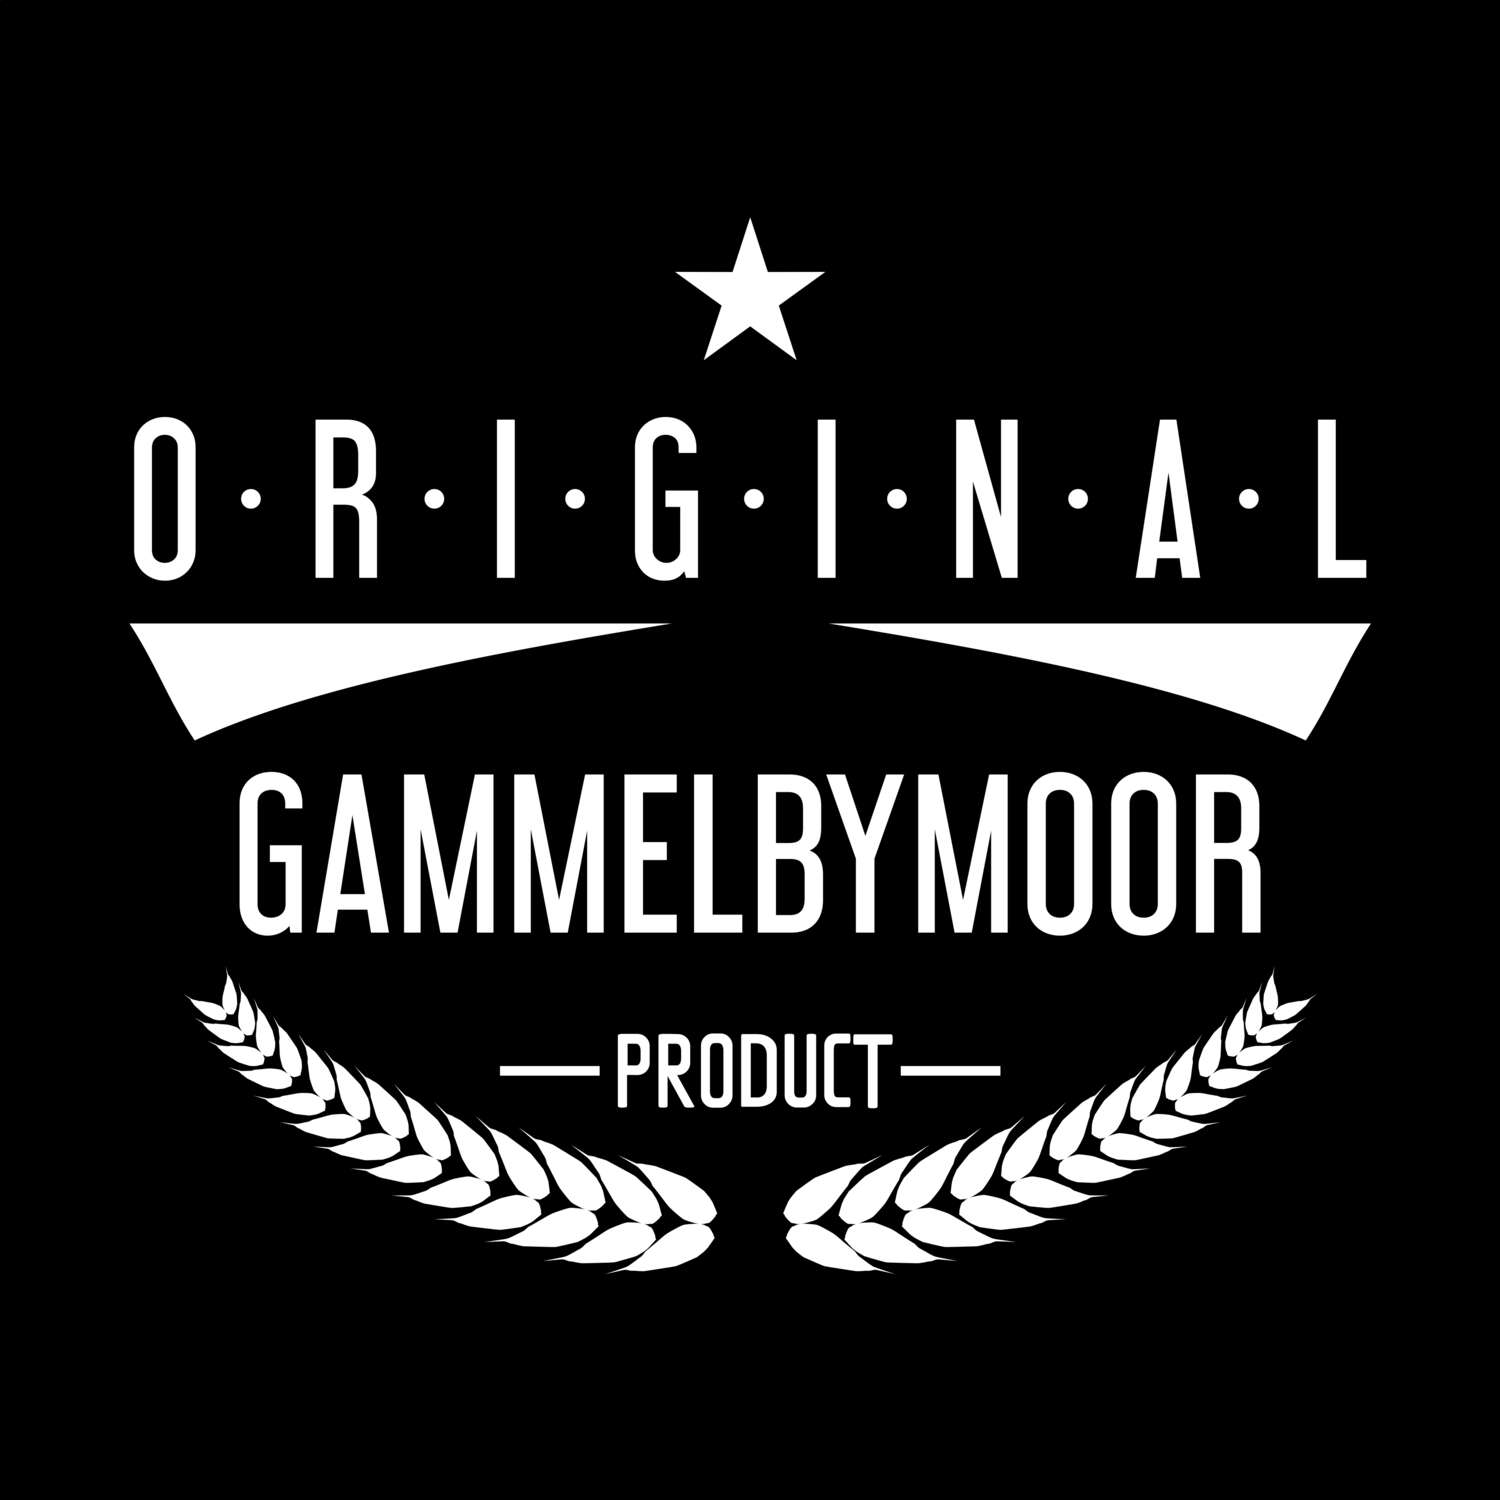 Gammelbymoor T-Shirt »Original Product«